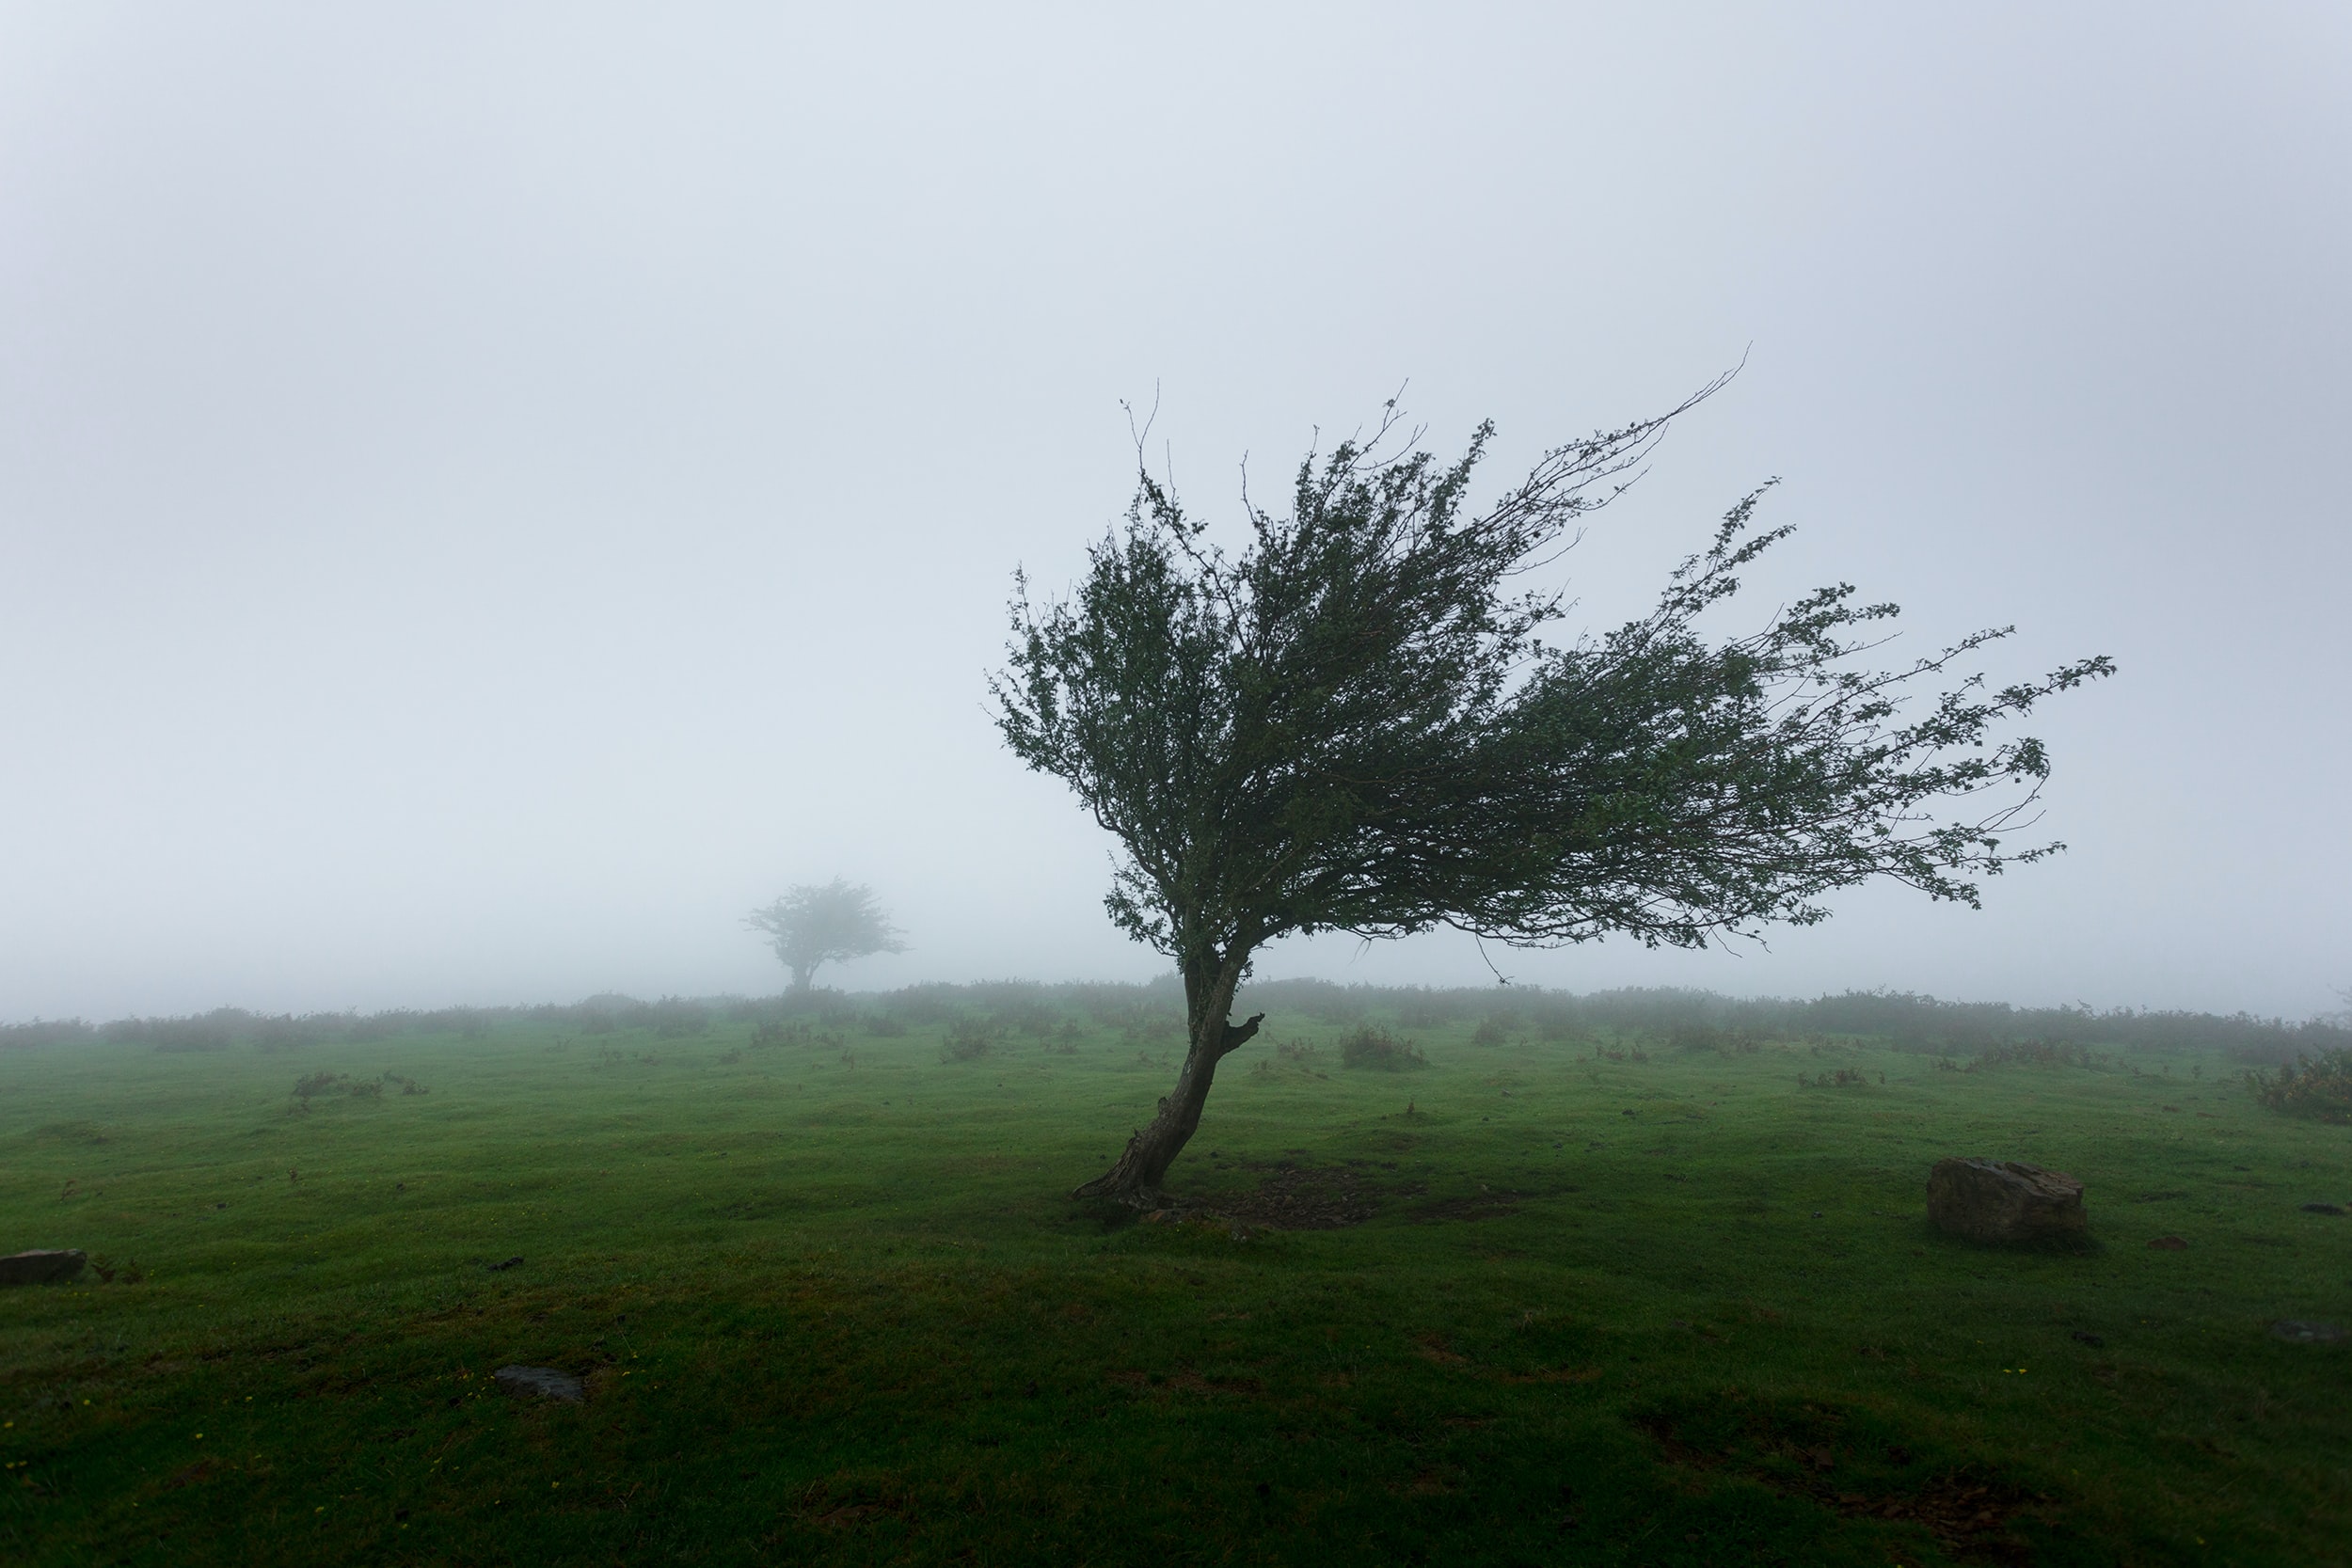 Tree in high wind; image by Khamkeo Vilaysing, via Unsplash.com.